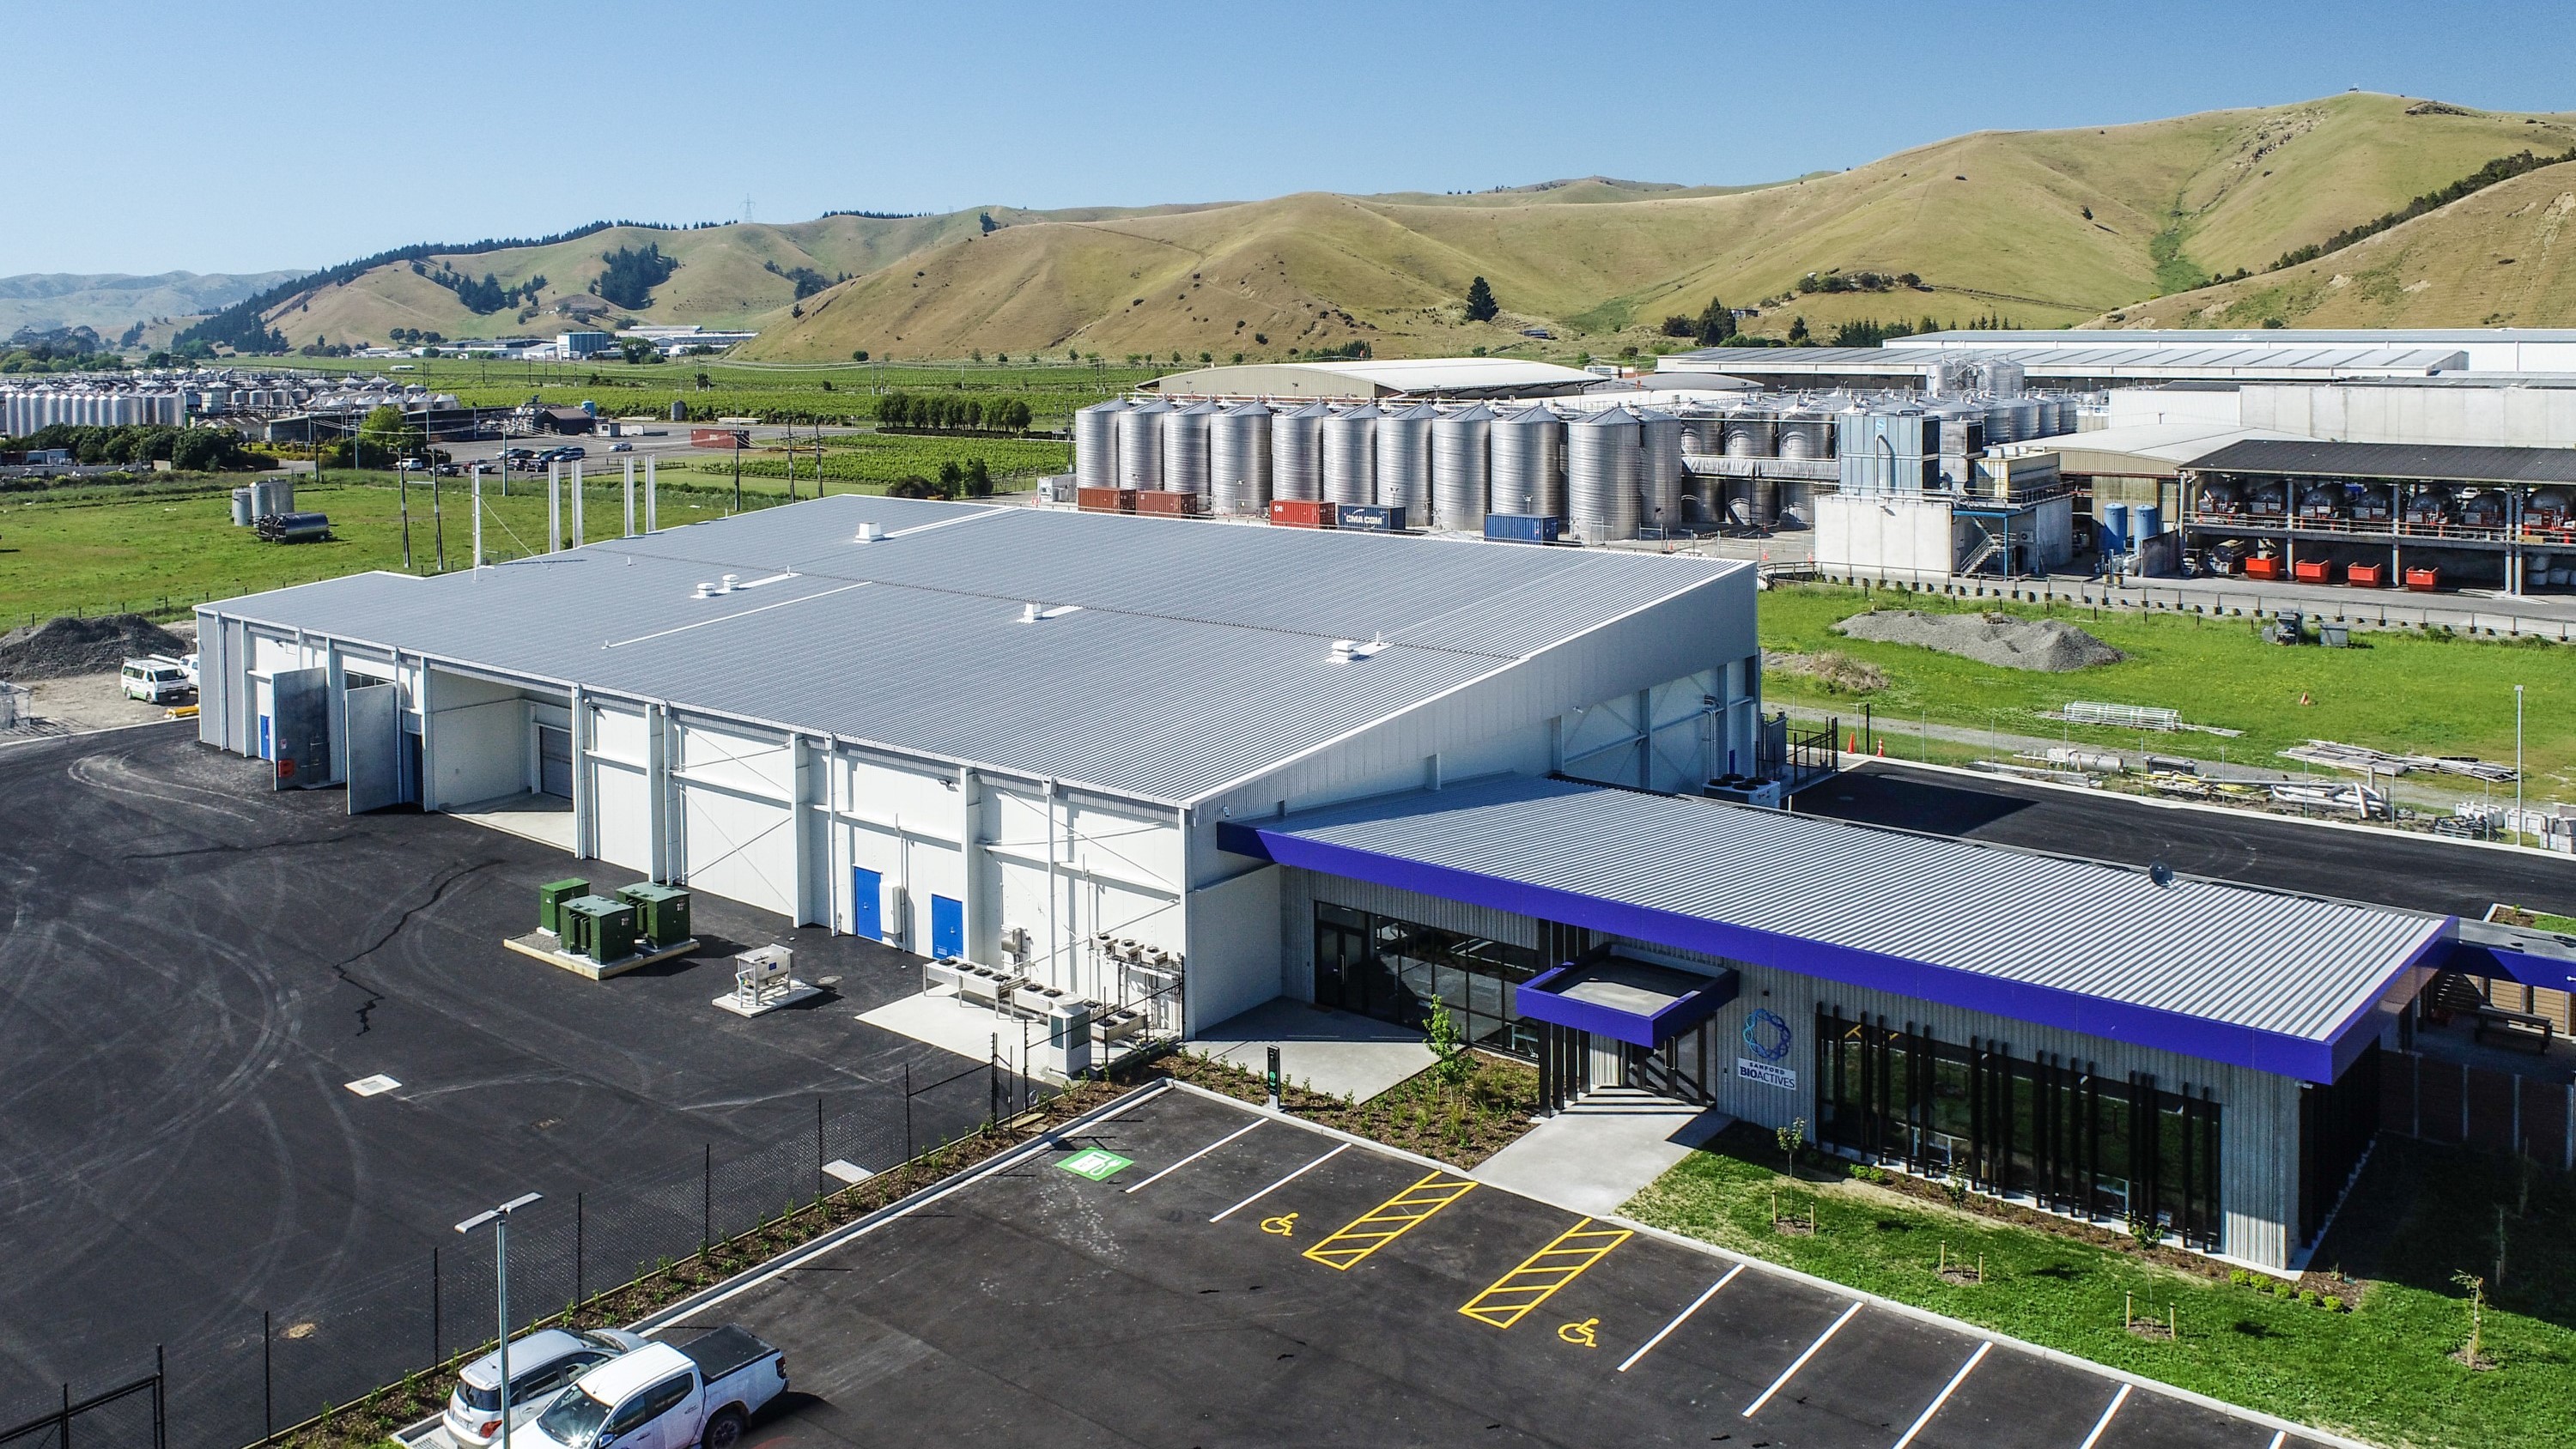 Sanford Bioactives Innovation Centre in Blenheim, New Zealand